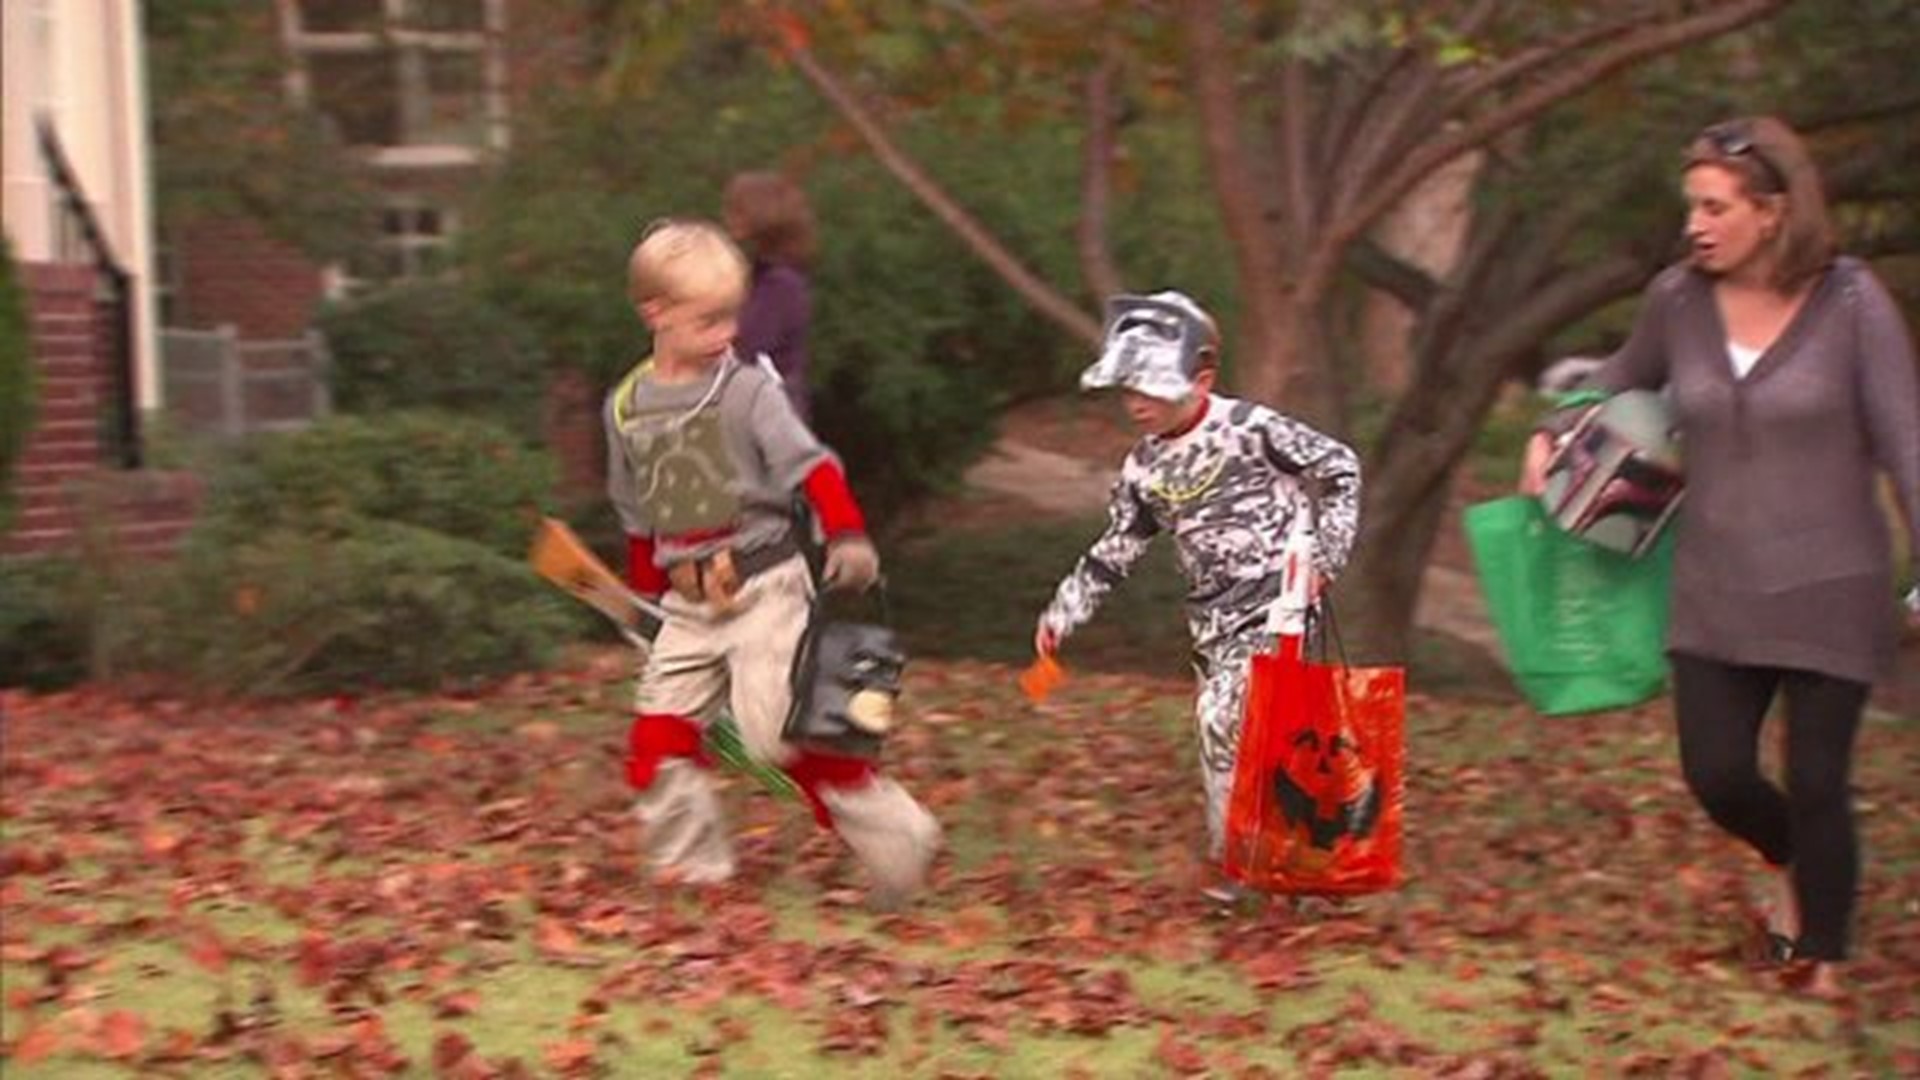 Newington Schools denies Halloween ban